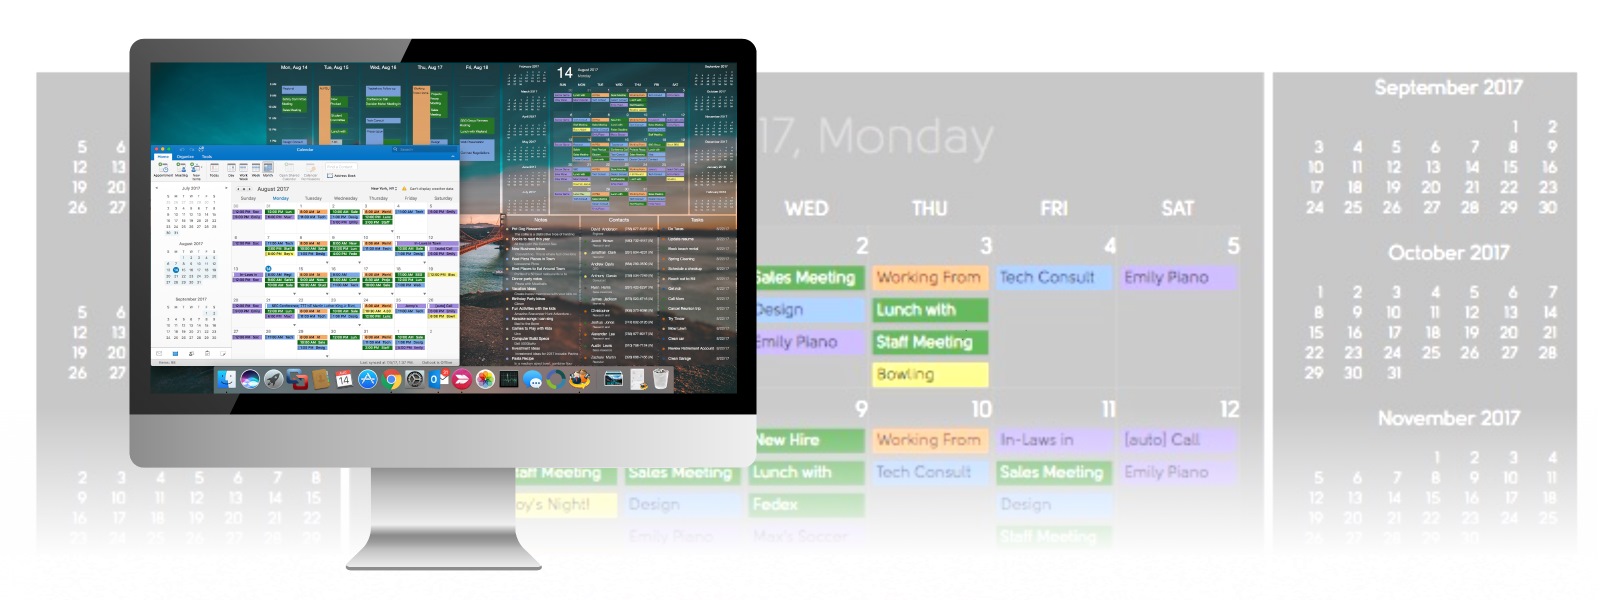 free calendar software for mac desktop